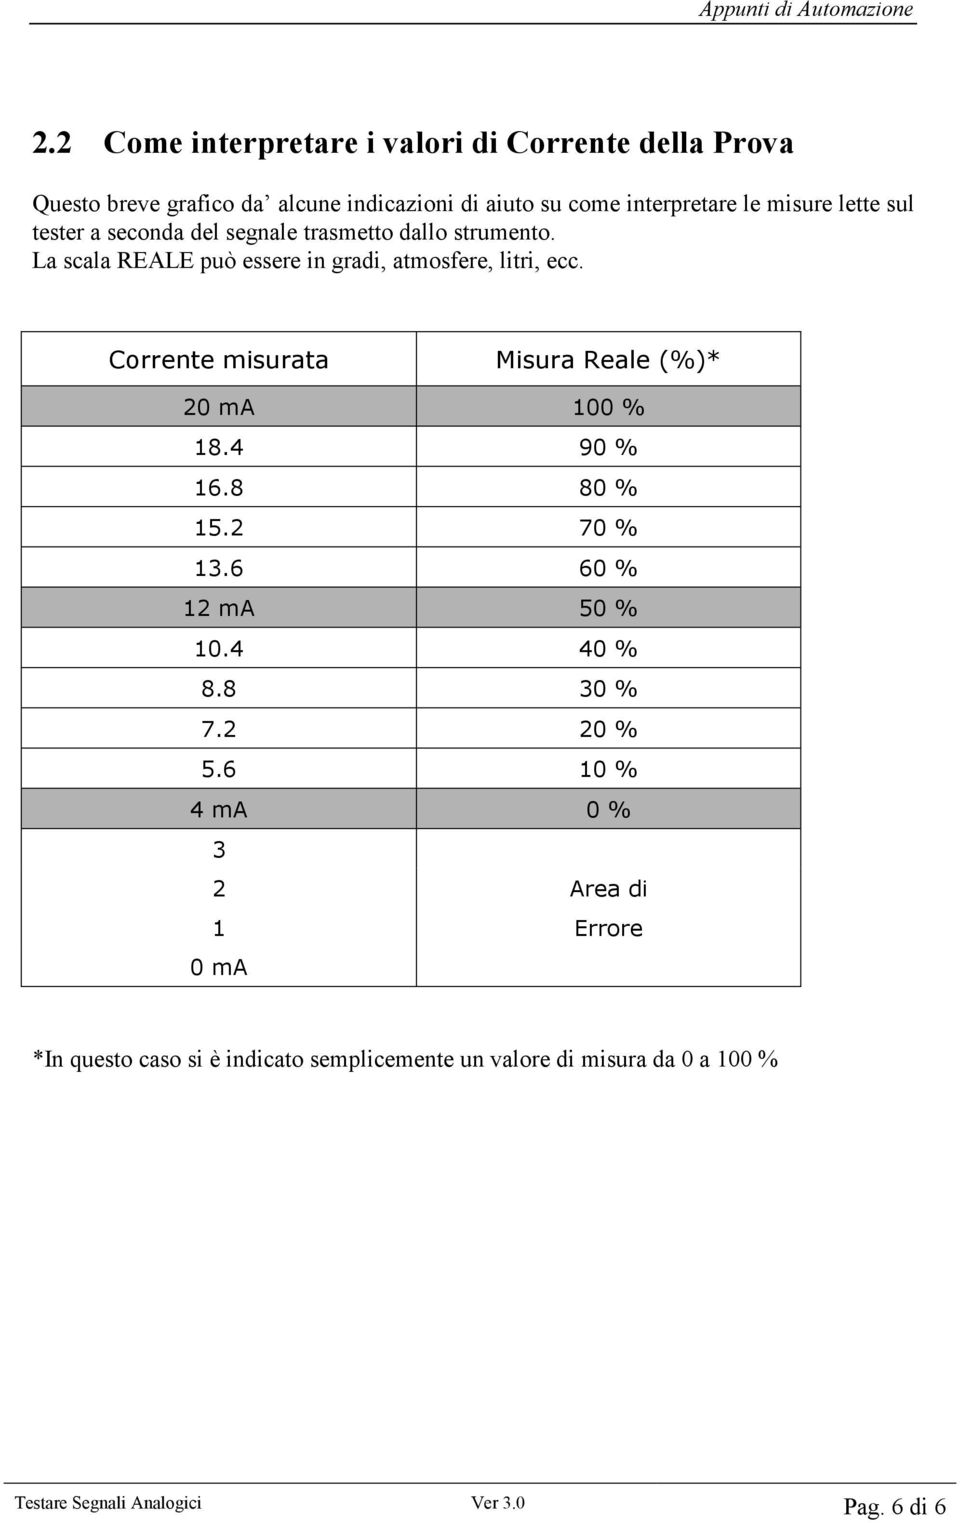 Corrente misurata Misura Reale (%)* 20 ma 100 % 18.4 90 % 16.8 80 % 15.2 70 % 13.6 60 % 12 ma 50 % 10.4 40 % 8.8 30 % 7.2 20 % 5.